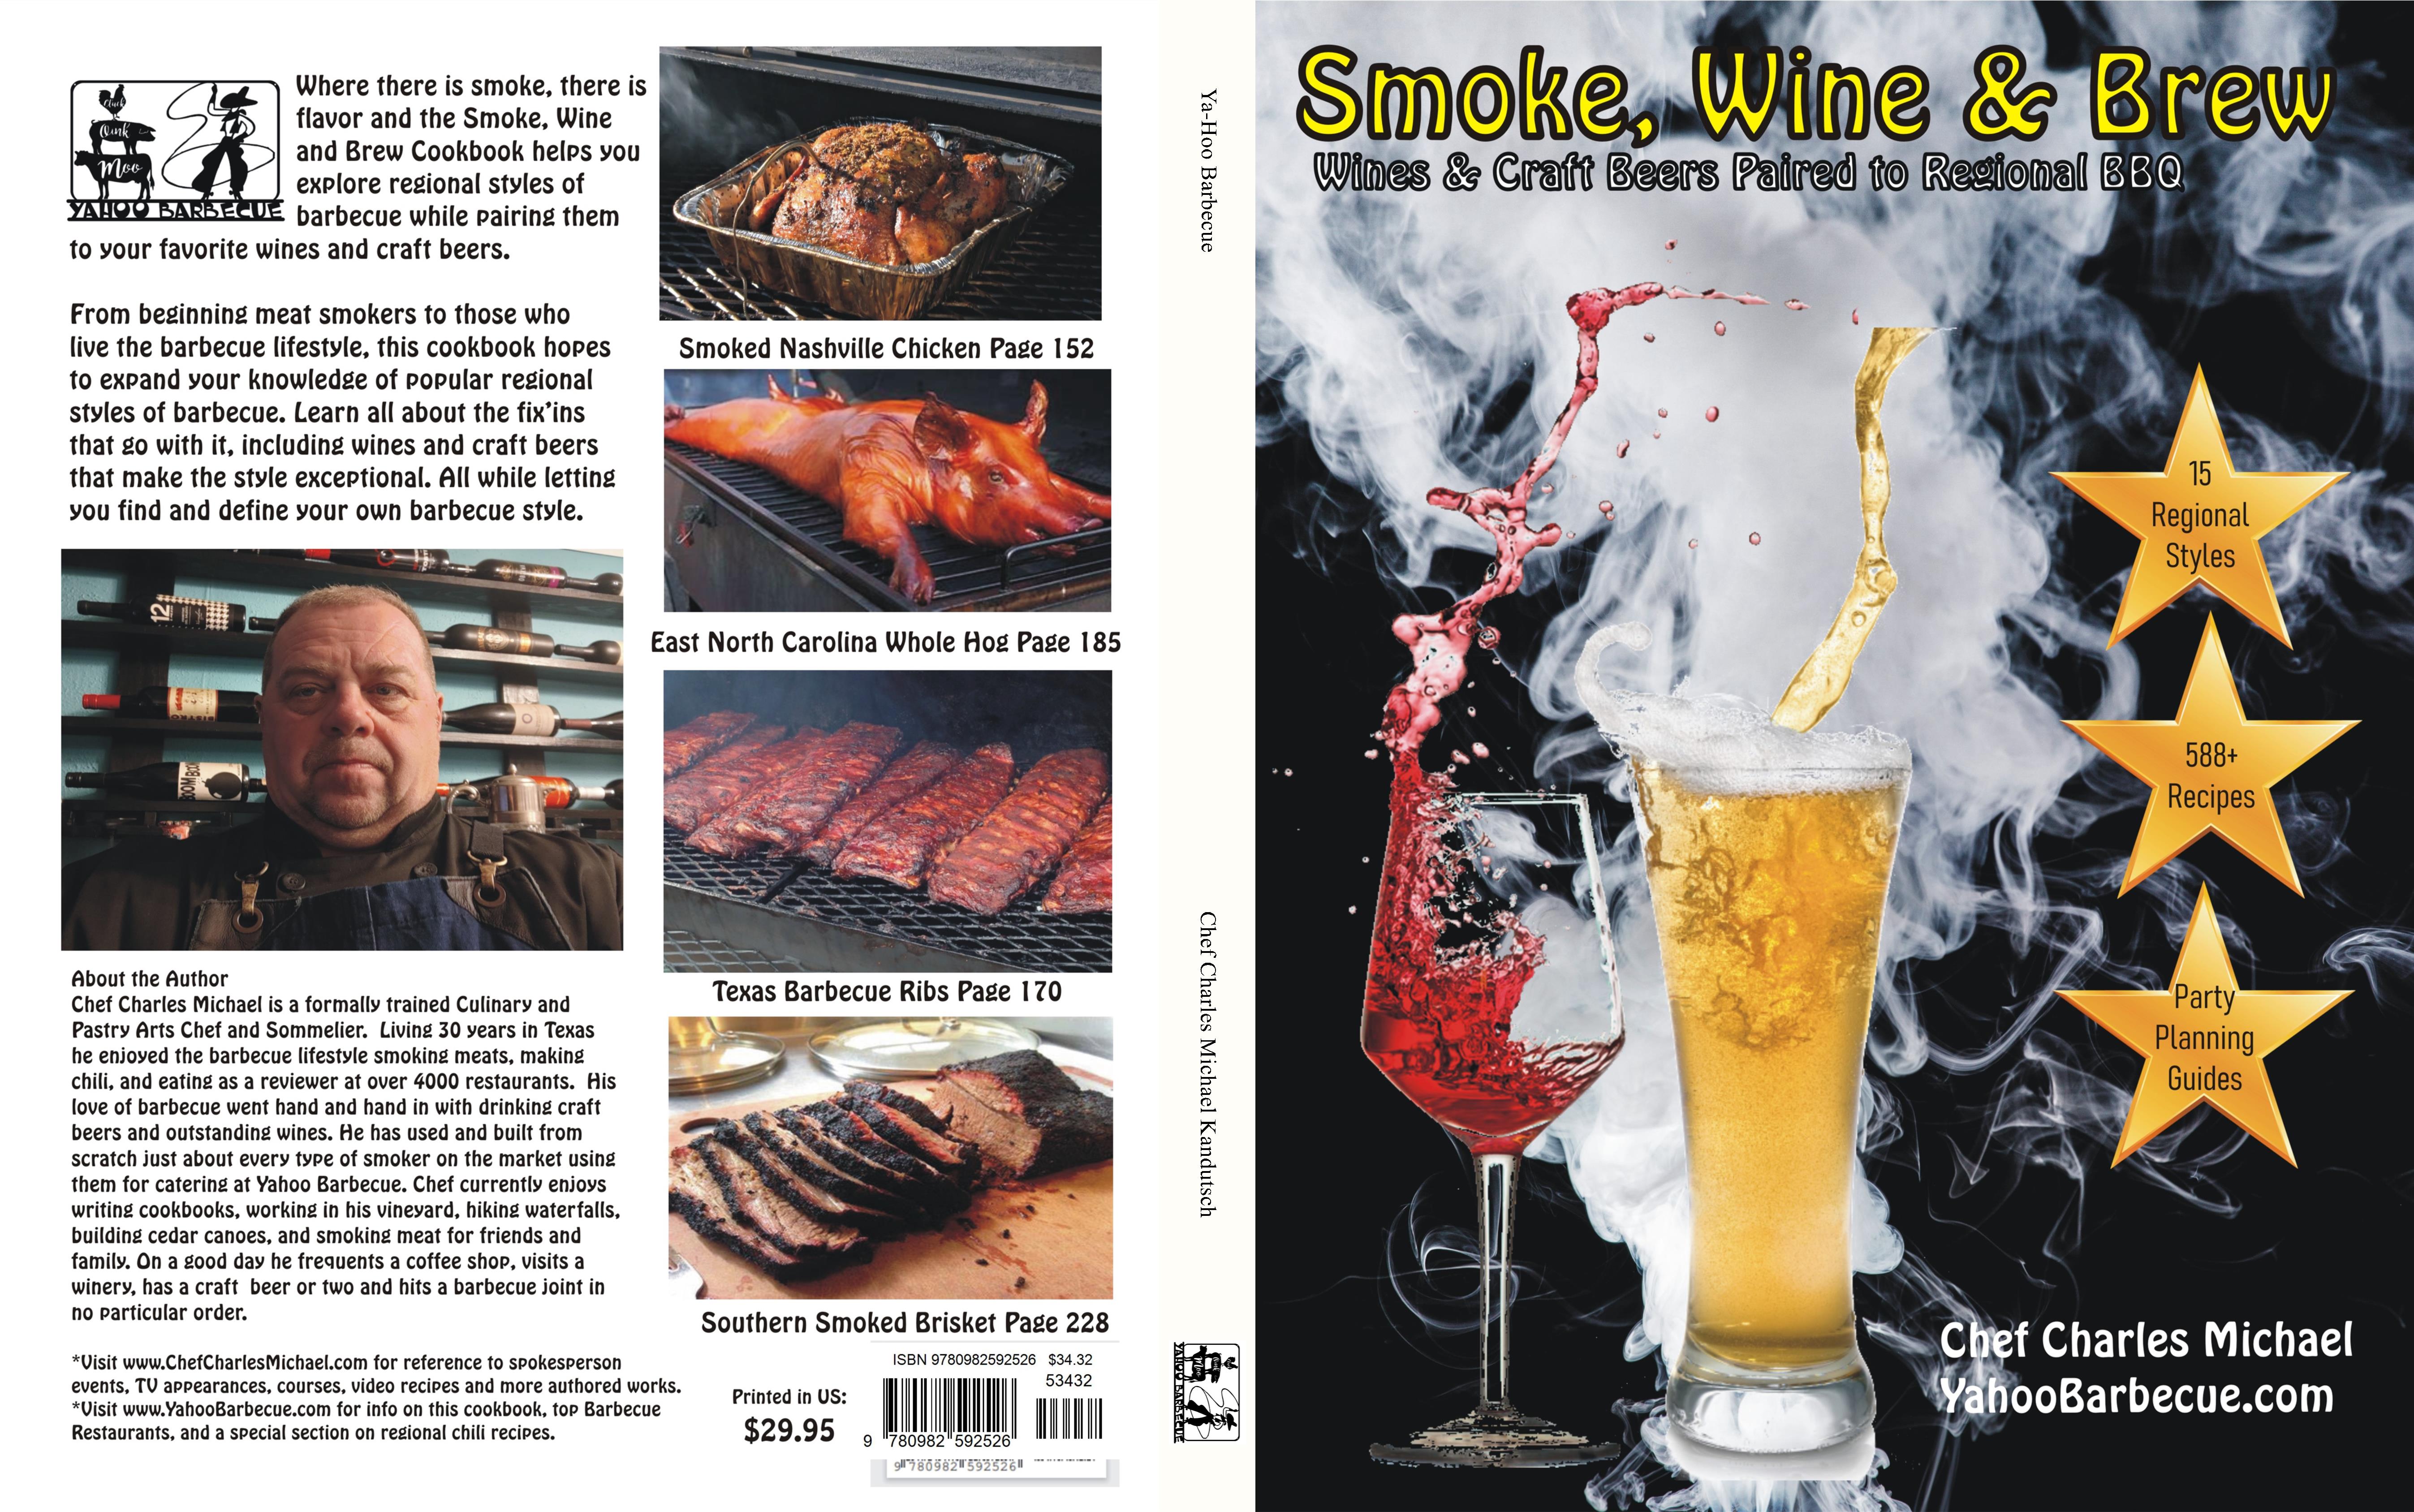 Smoke, Wine & Brew cover image